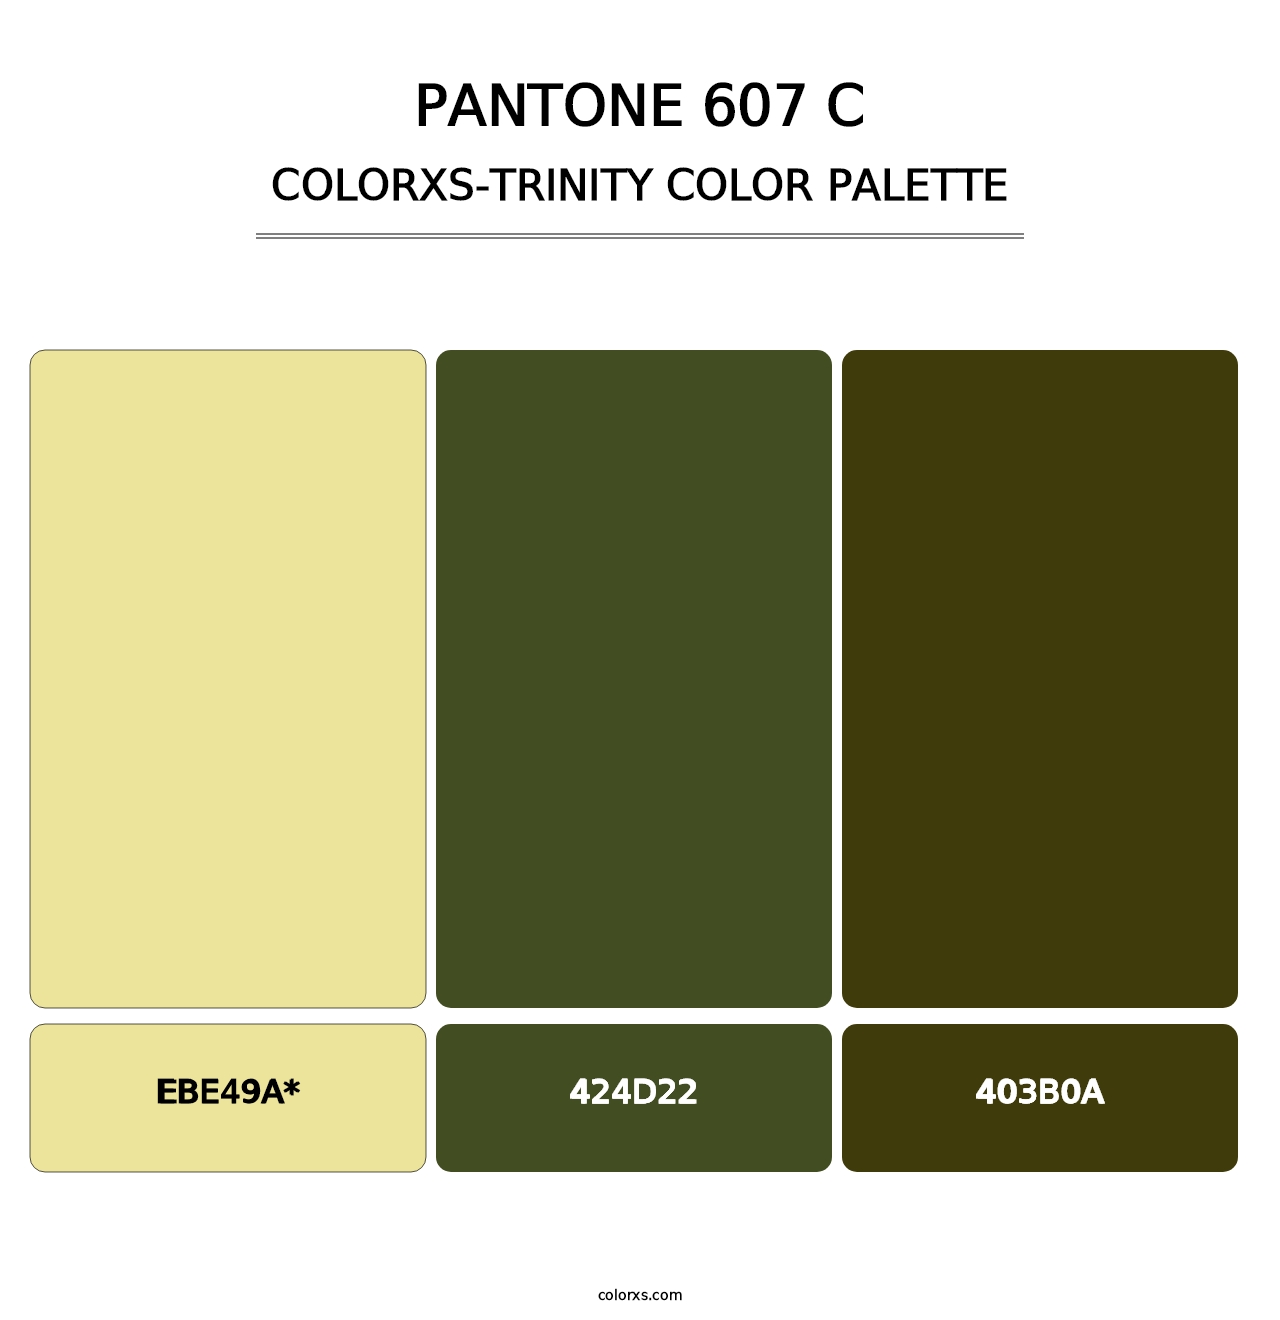 PANTONE 607 C - Colorxs Trinity Palette